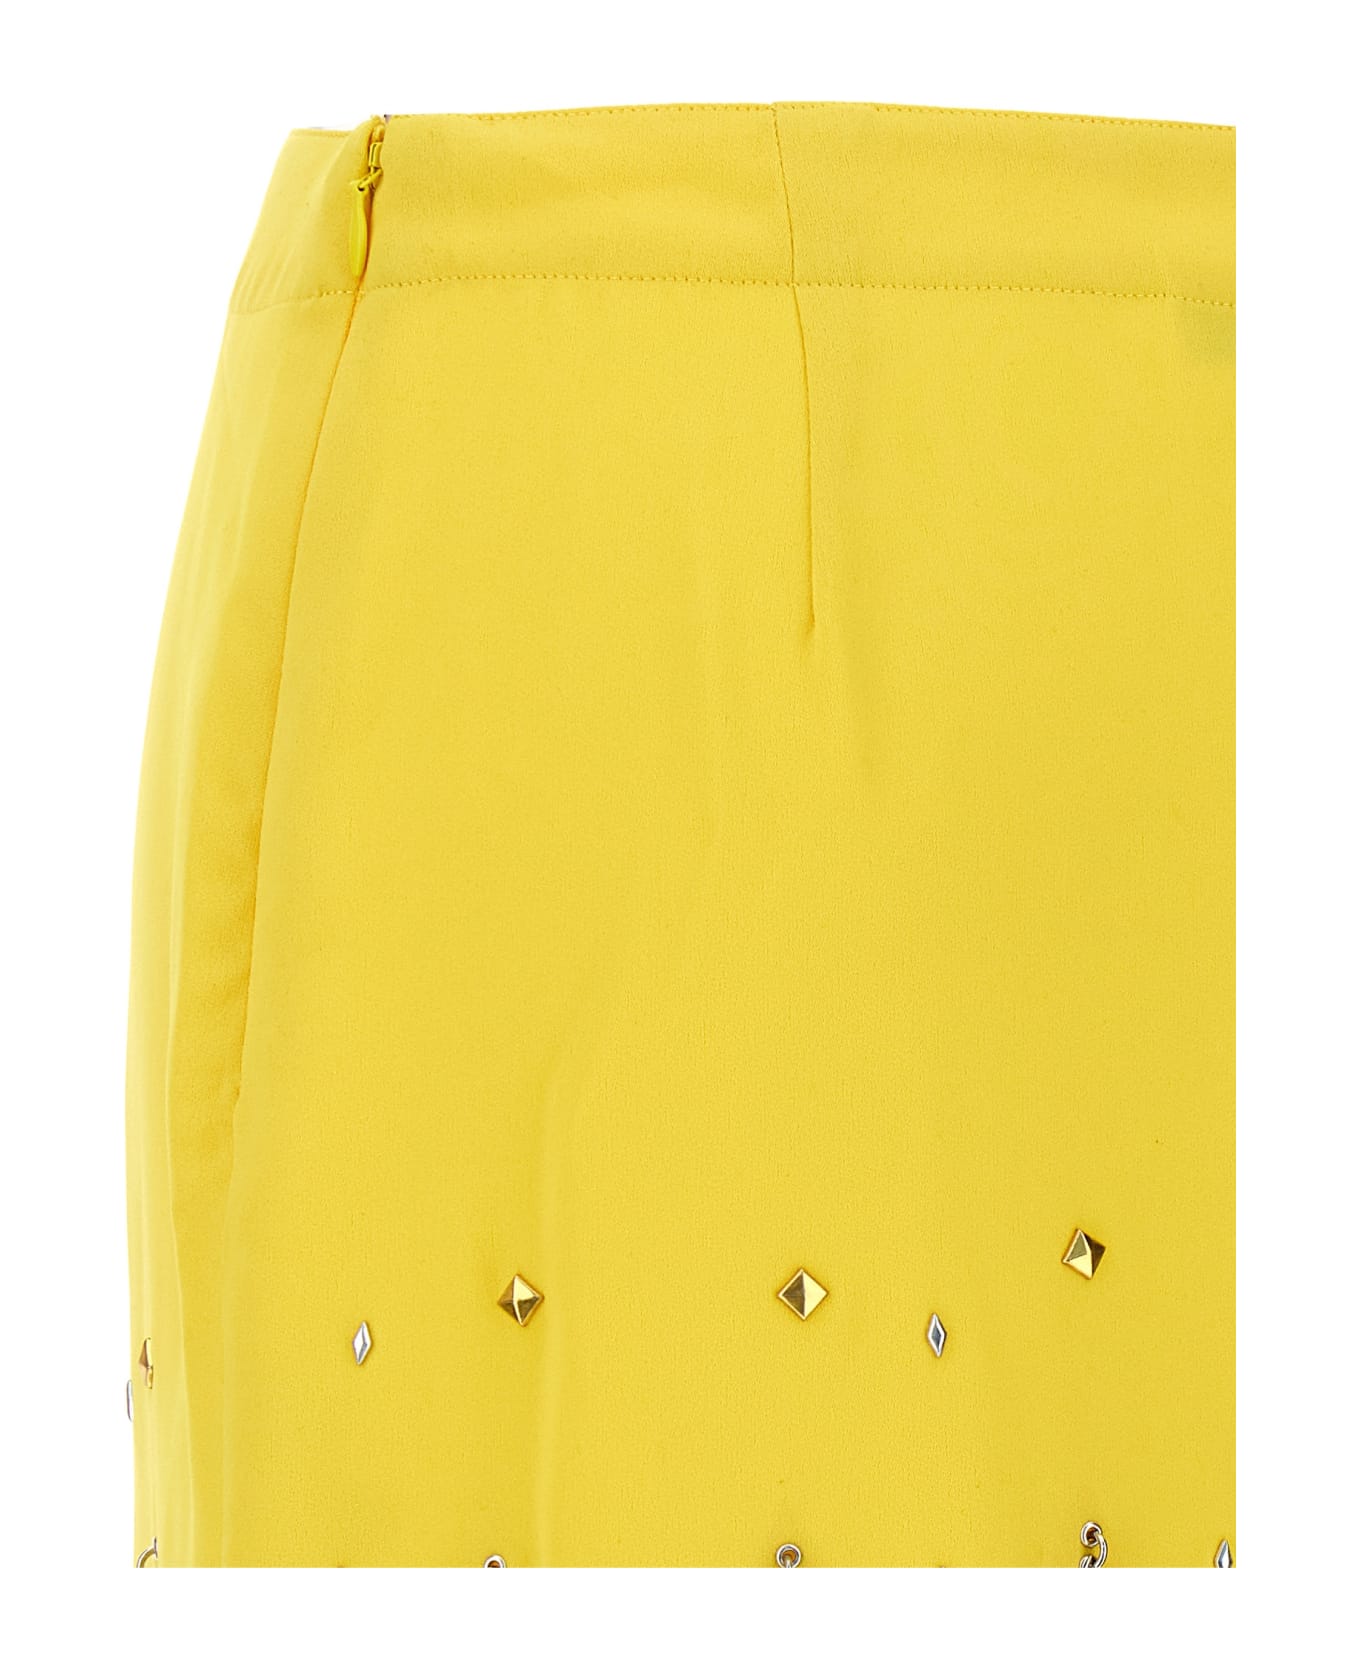 Paco Rabanne Diamond-hued Sequin Skirt - Yellow